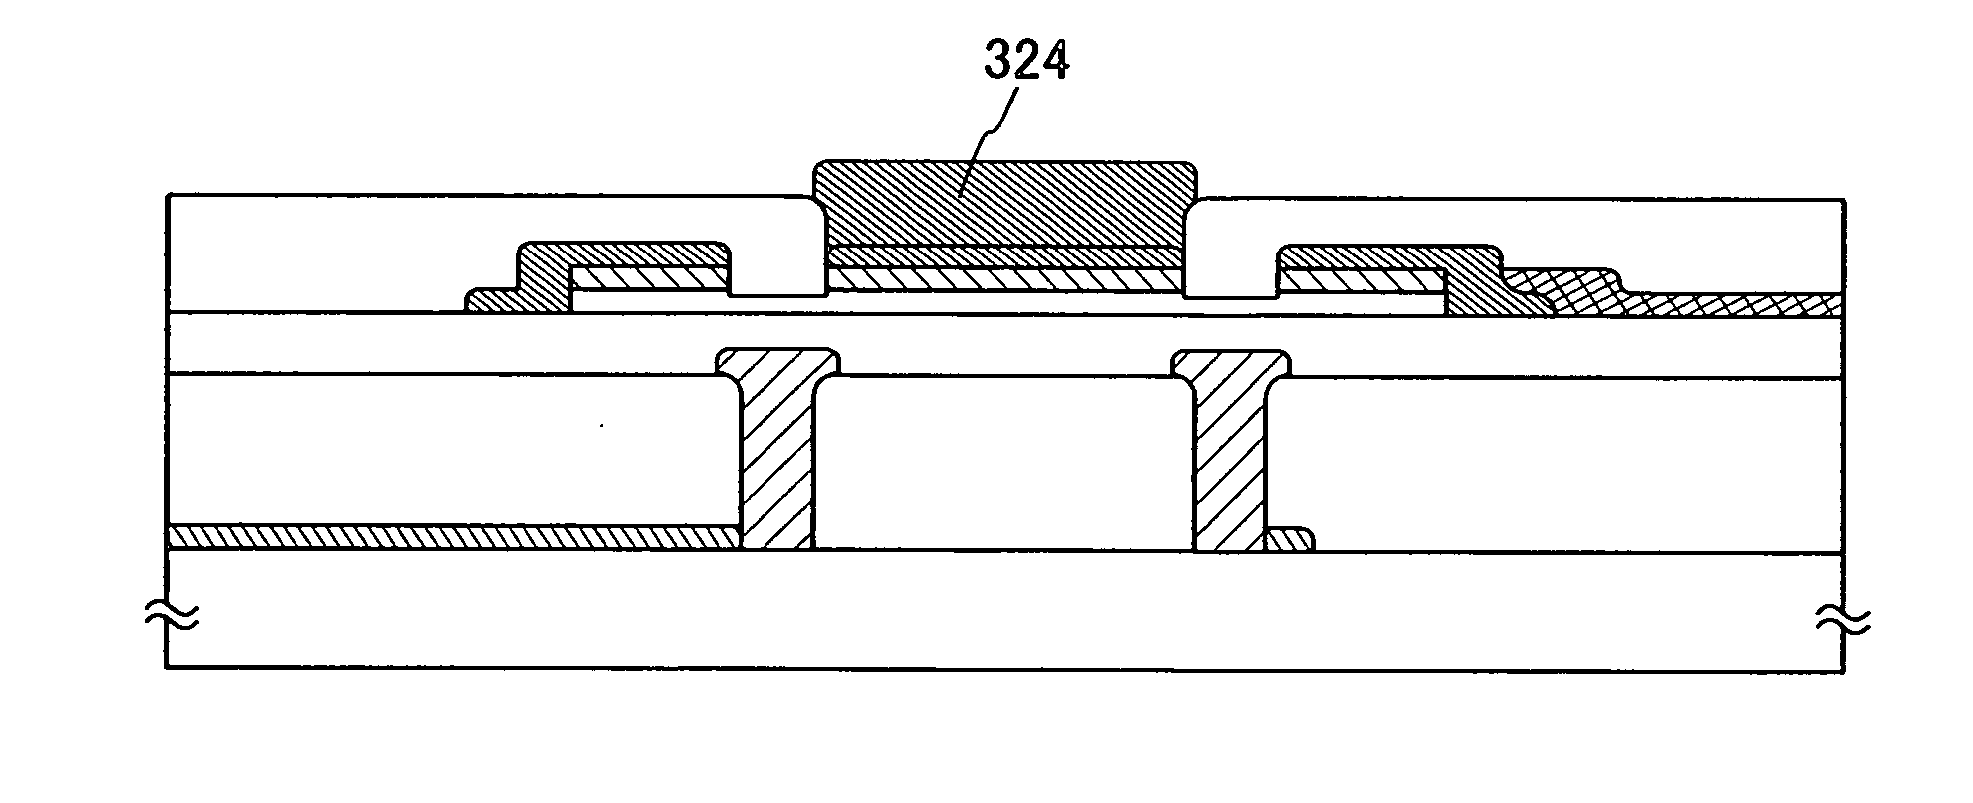 Manufacturing method of thin film transistor